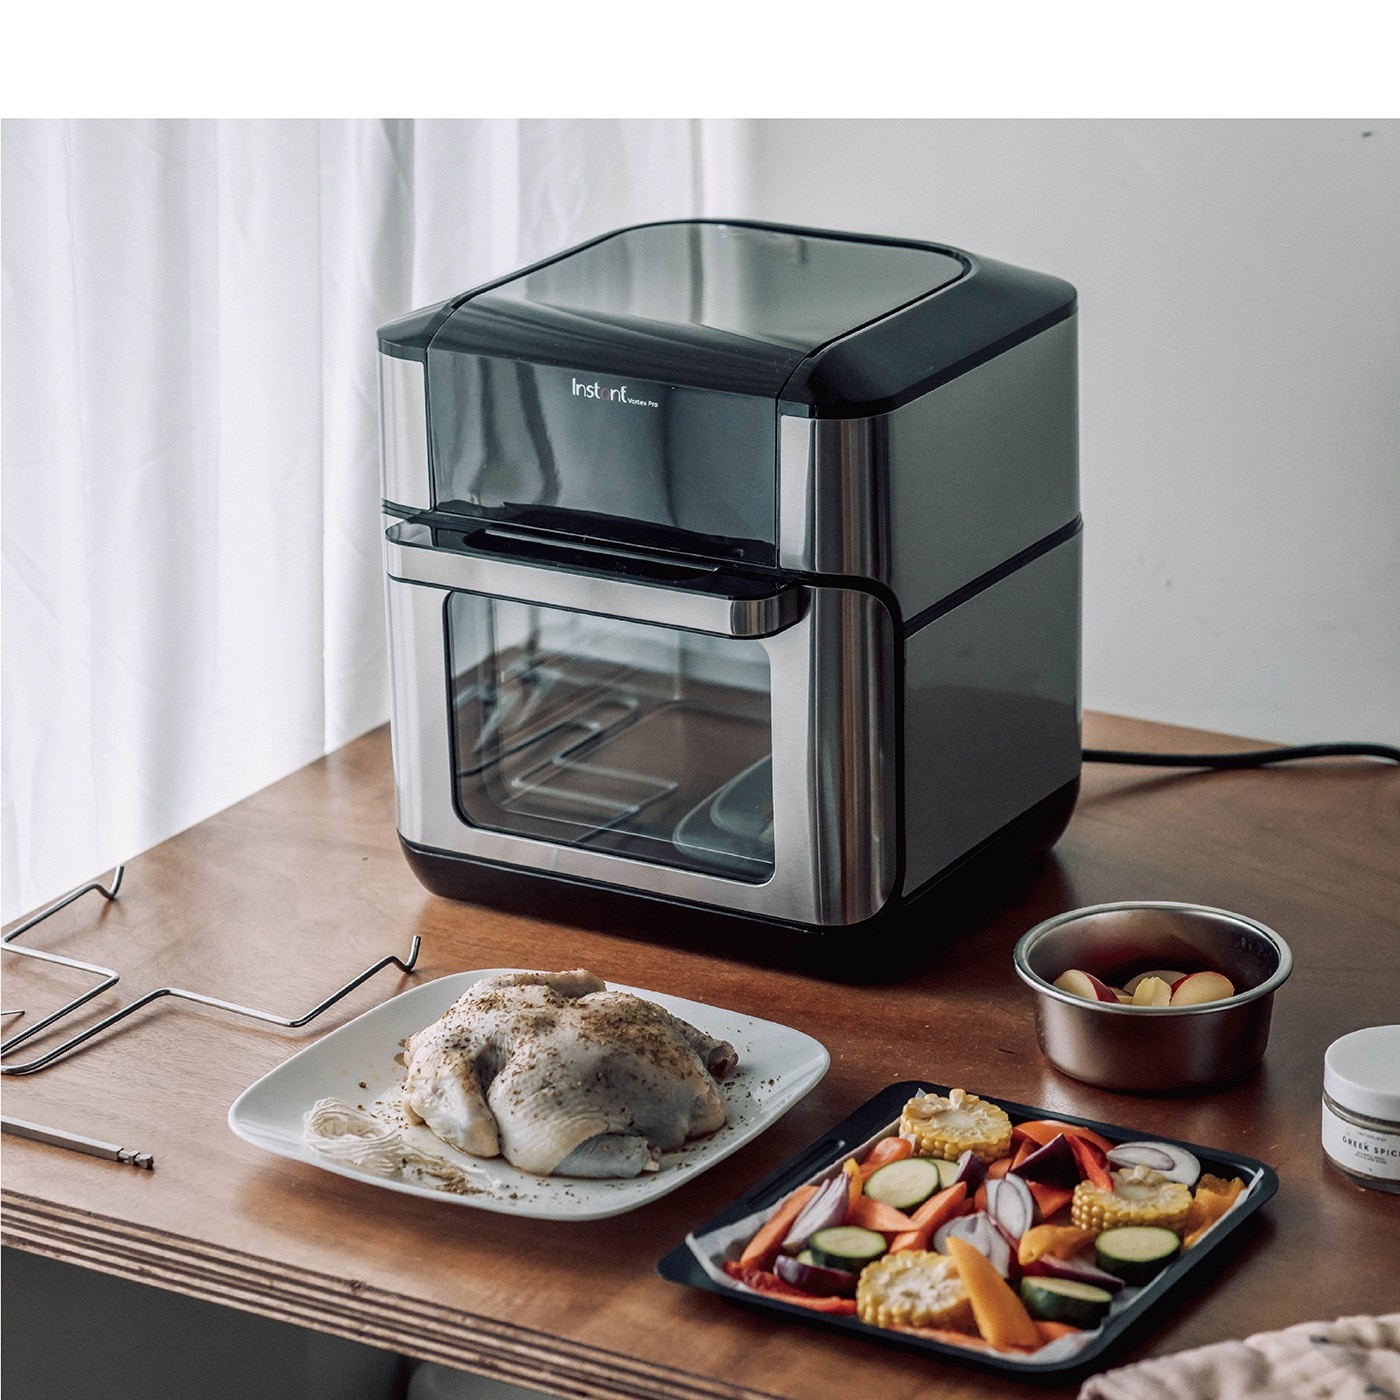 Instant Vortex Pro 9.5公升氣炸烤箱,烘焙,烤吐司模式,讓使用者可以除了料理正餐,也能烘烤麵包,貝果等午茶點心.Quick Cooking快速預熱搭配不同料理方式,可以快速完成預熱,溫度範圍32°C至205°C